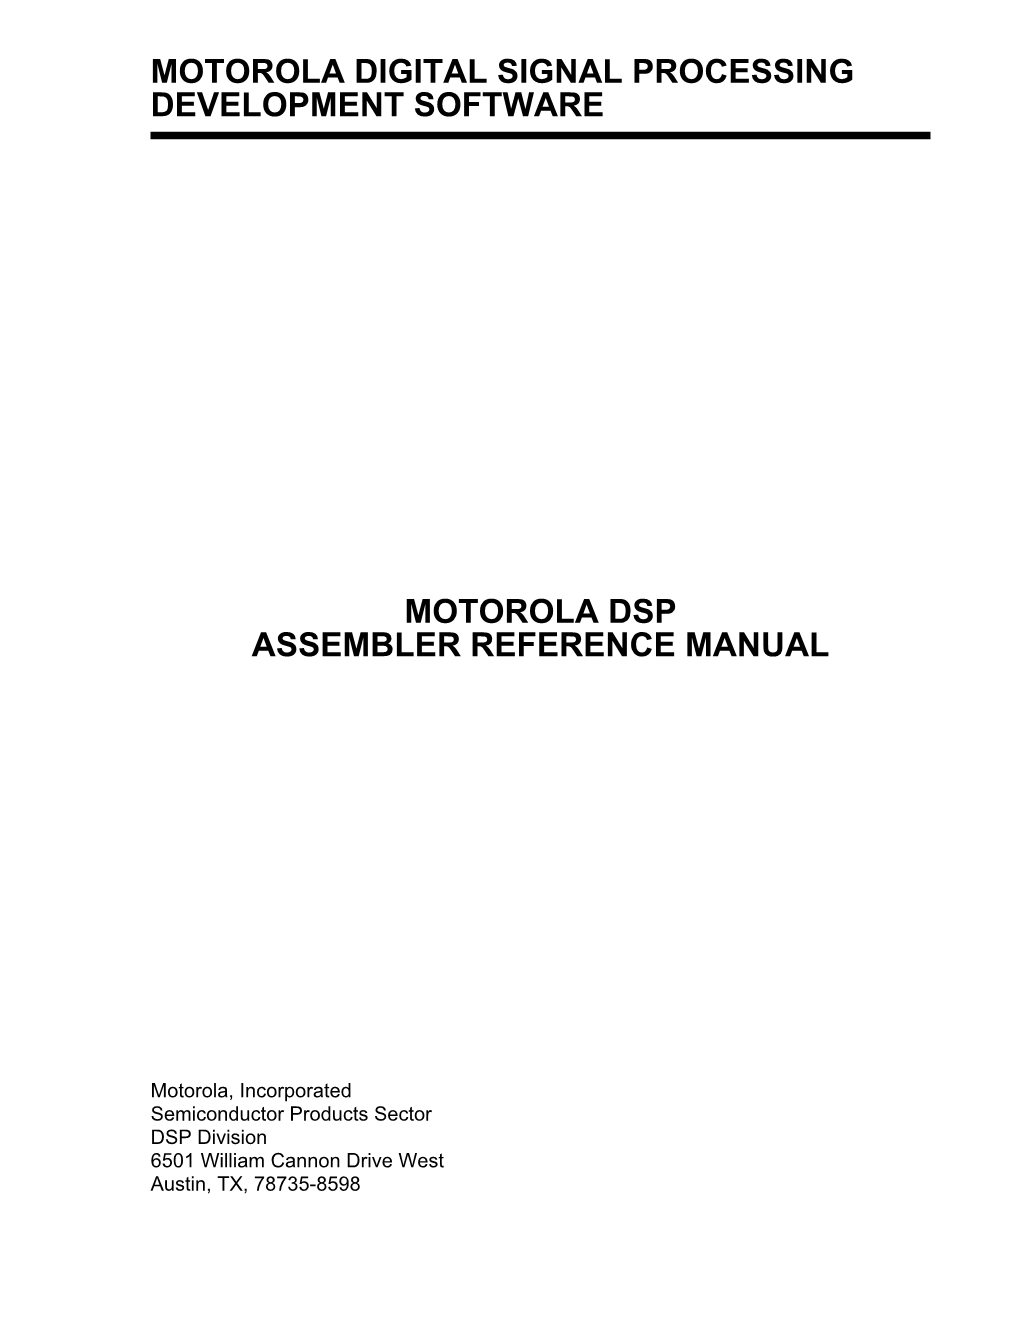 Motorola Dsp Assembler Reference Manual